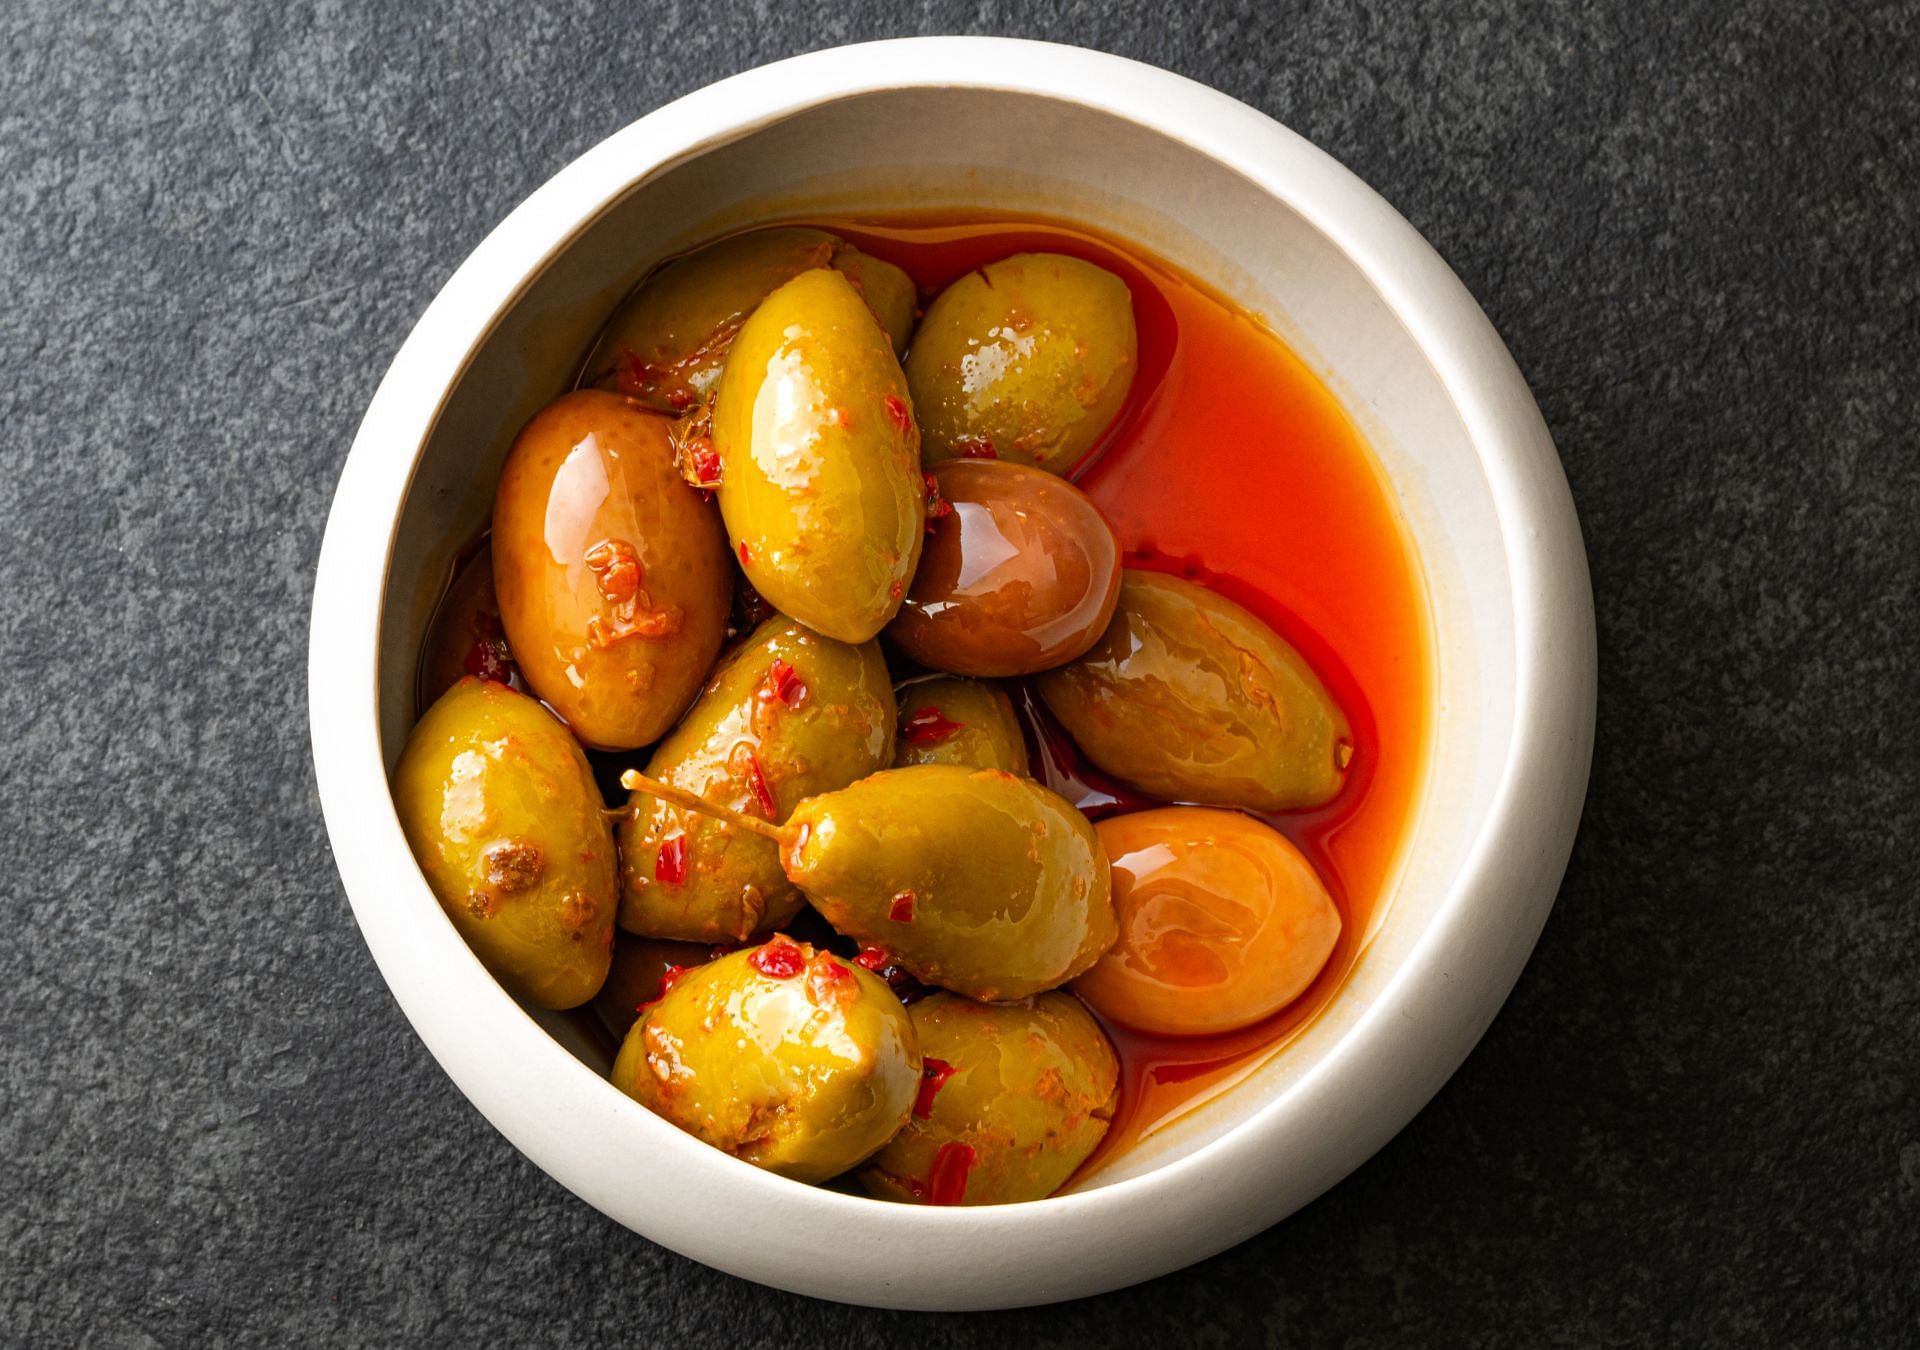 Properties that make green olives good for you (Image via Unsplash/blackieshoot)